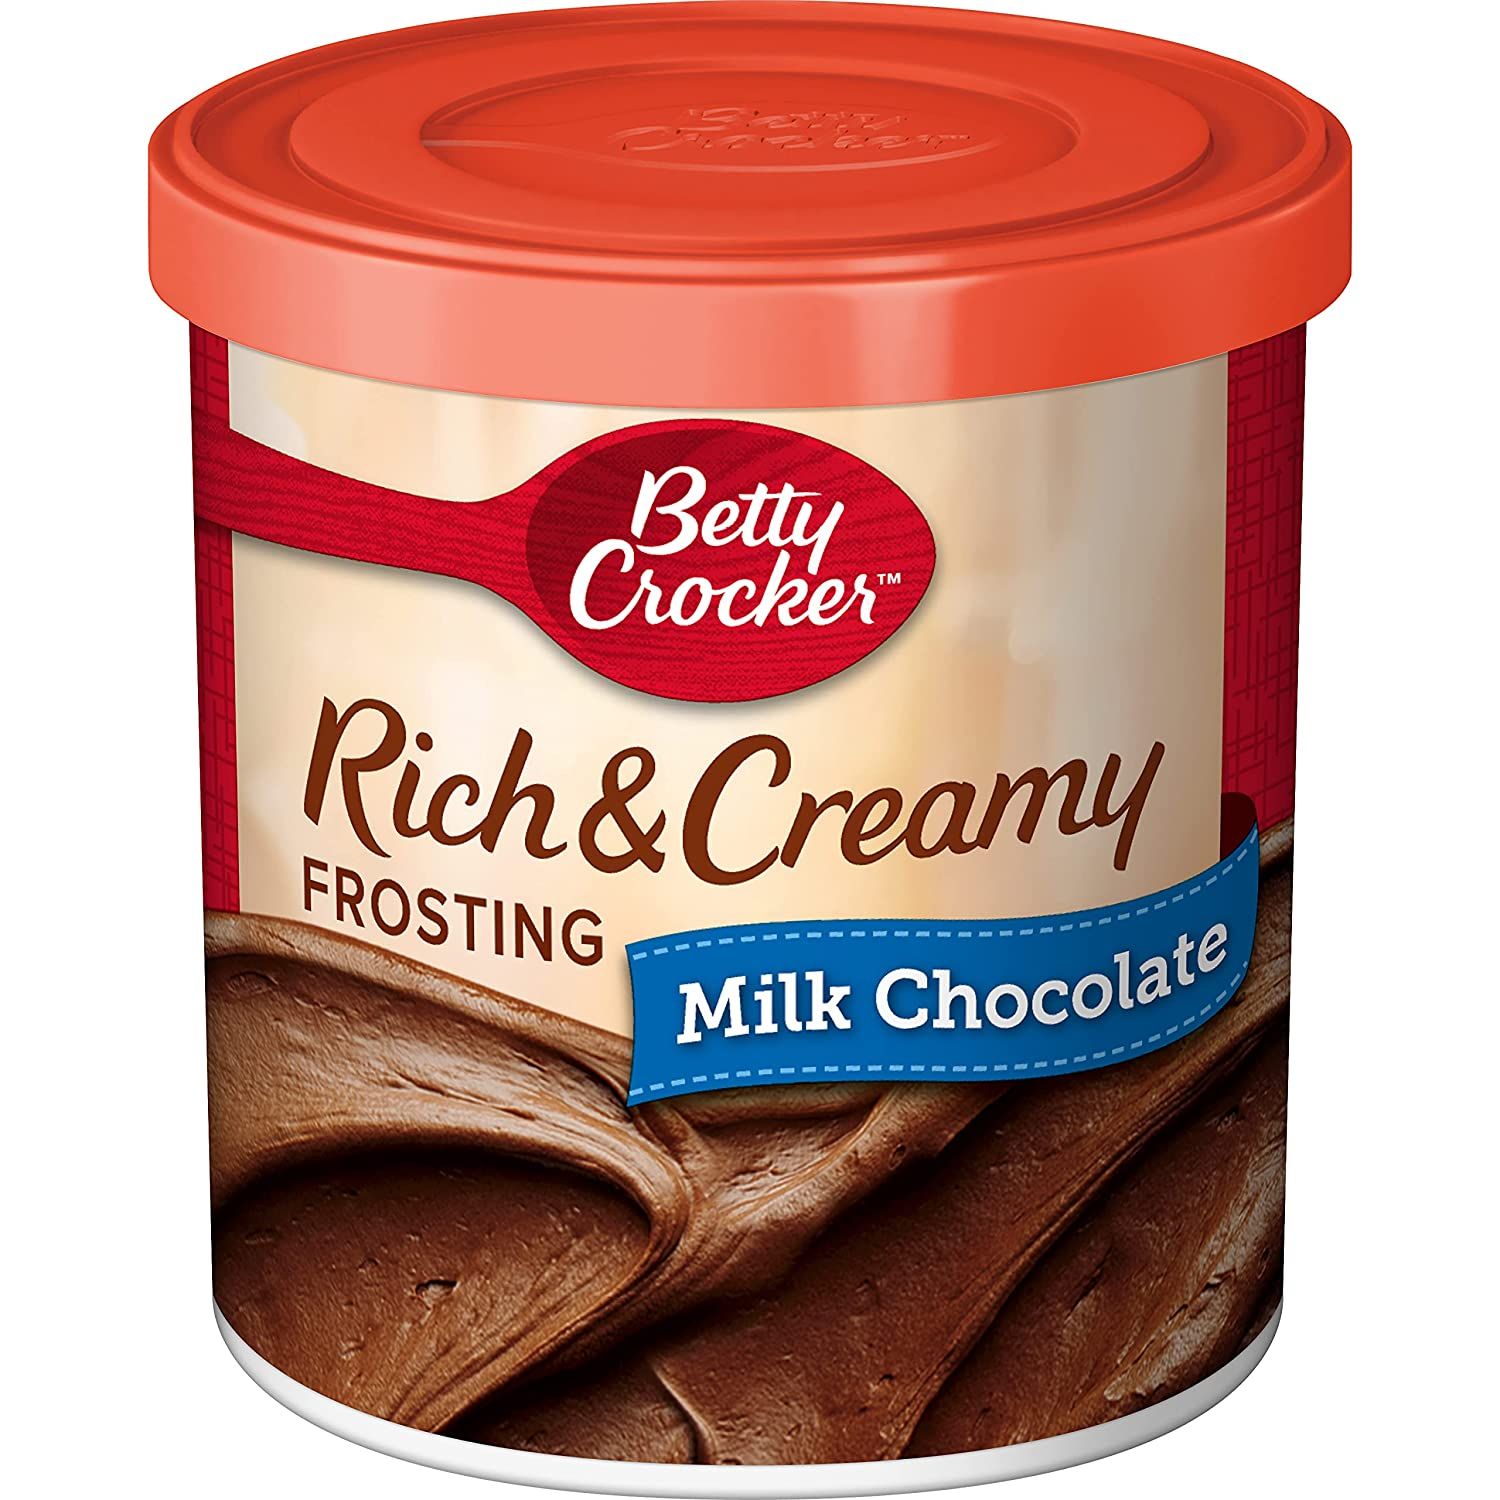 Betty Crocker Rich & Creamy Frosting Milk Chocolate Image